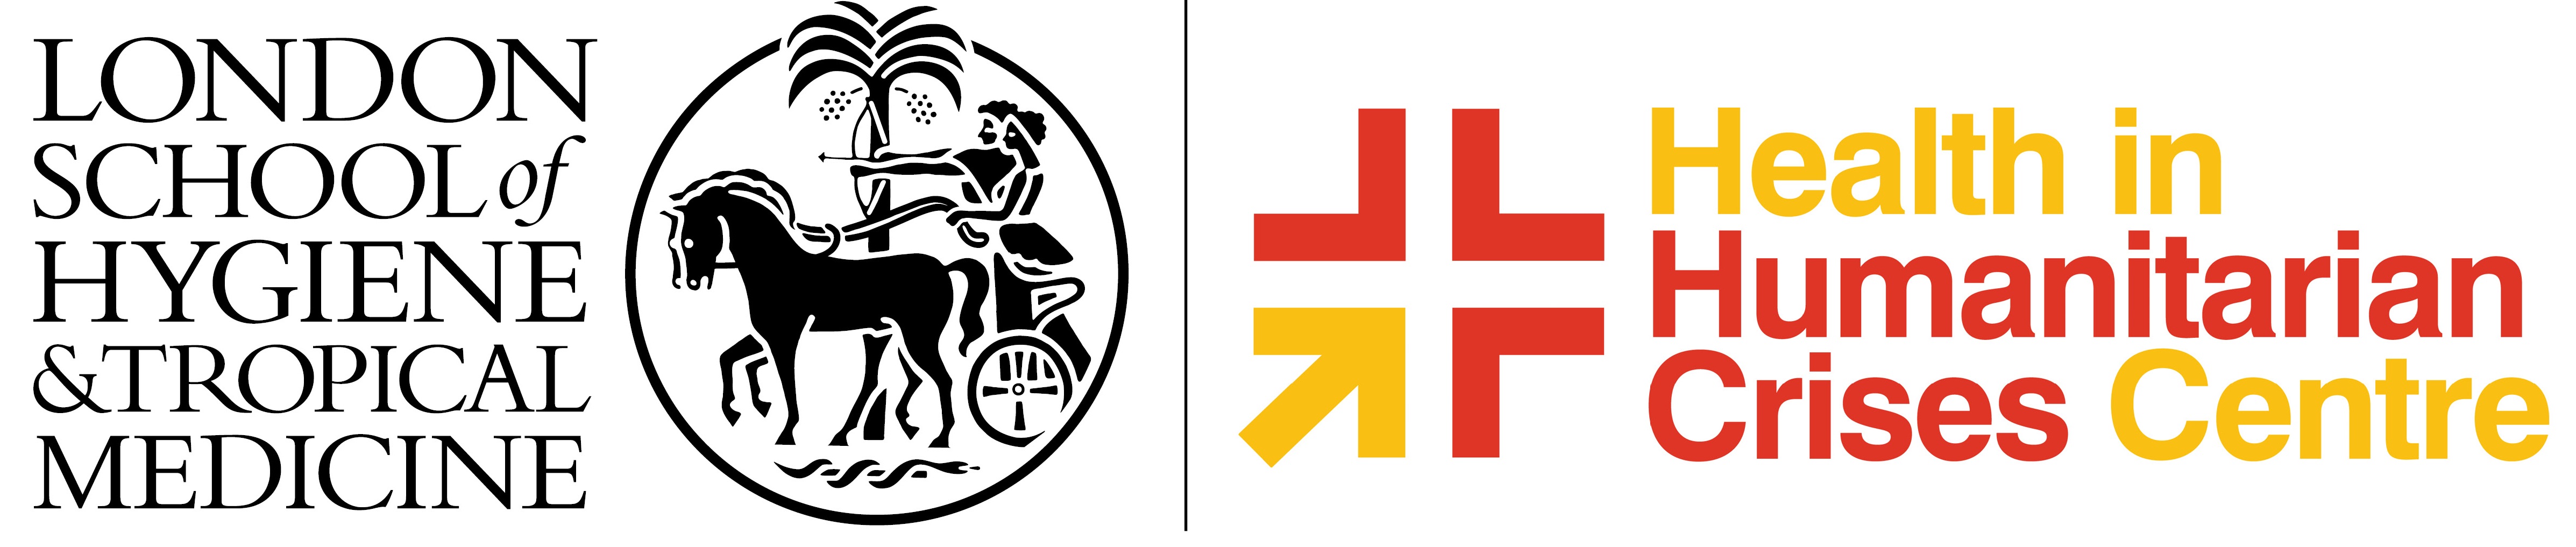 lshtm logo and crises centre logo lockup